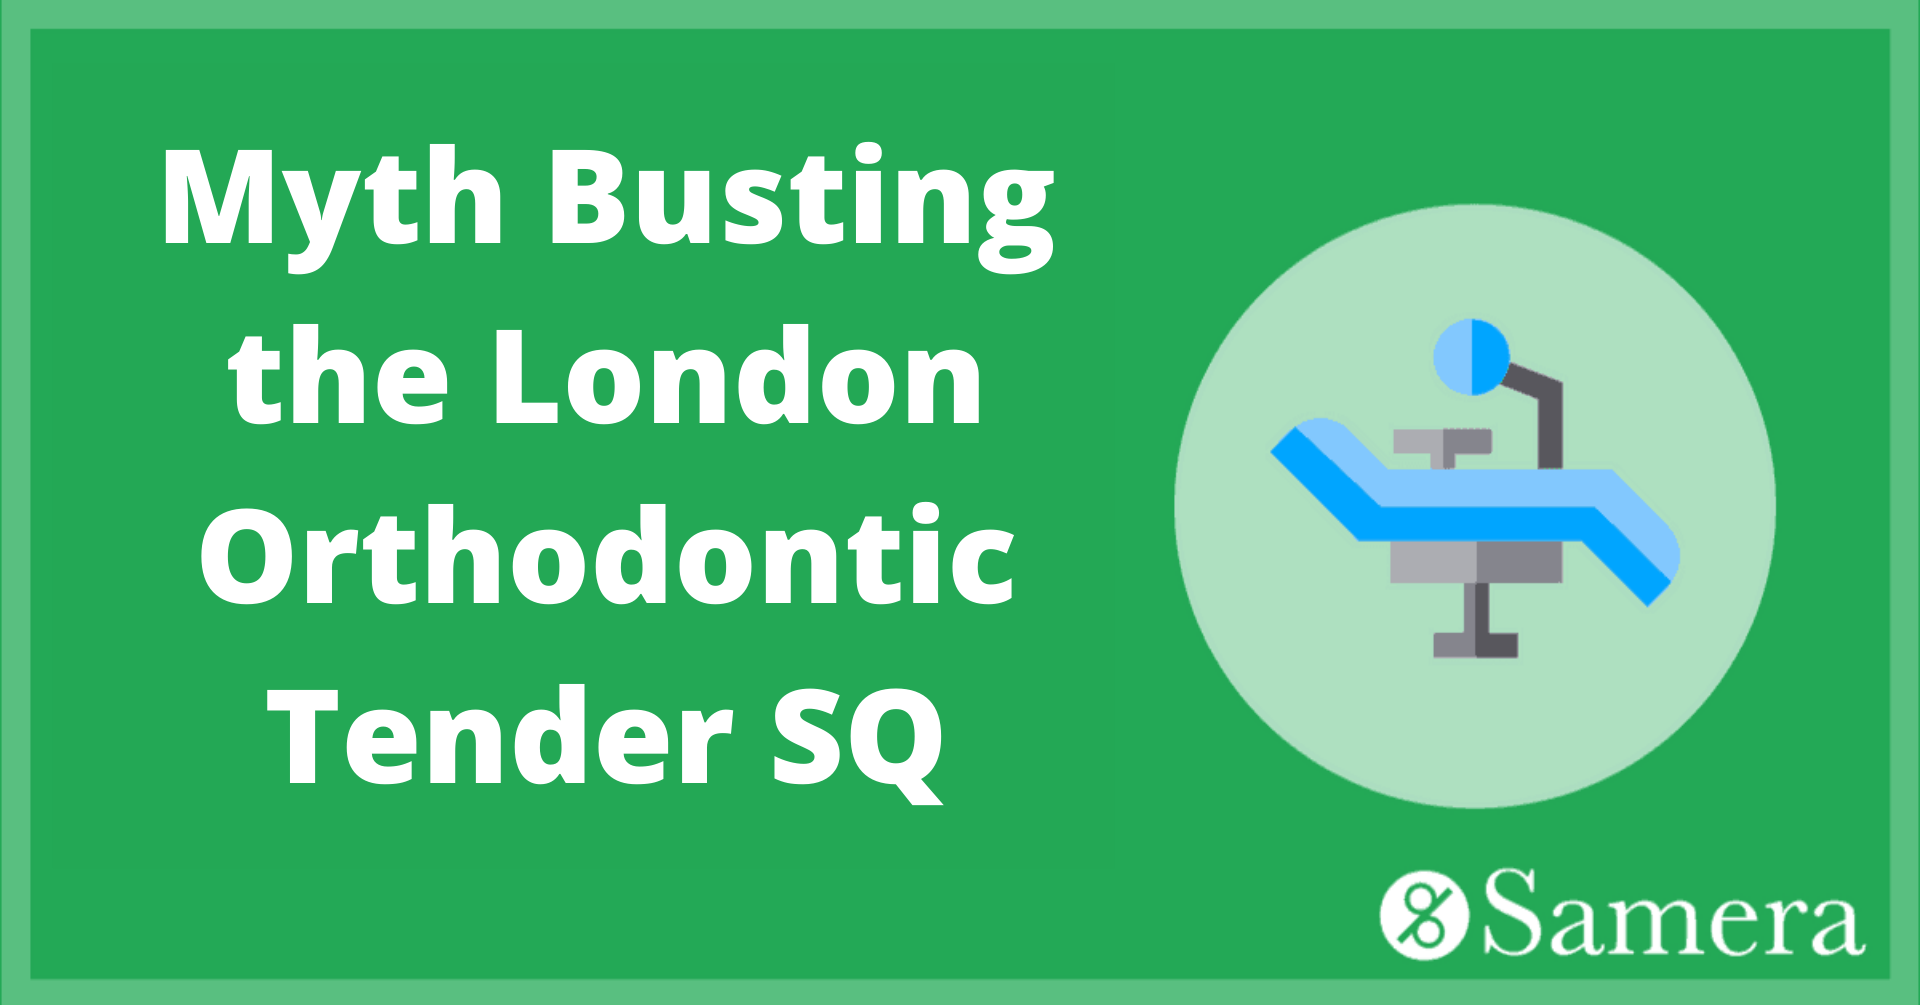 Myth Busting the London Orthodontic Tender SQ